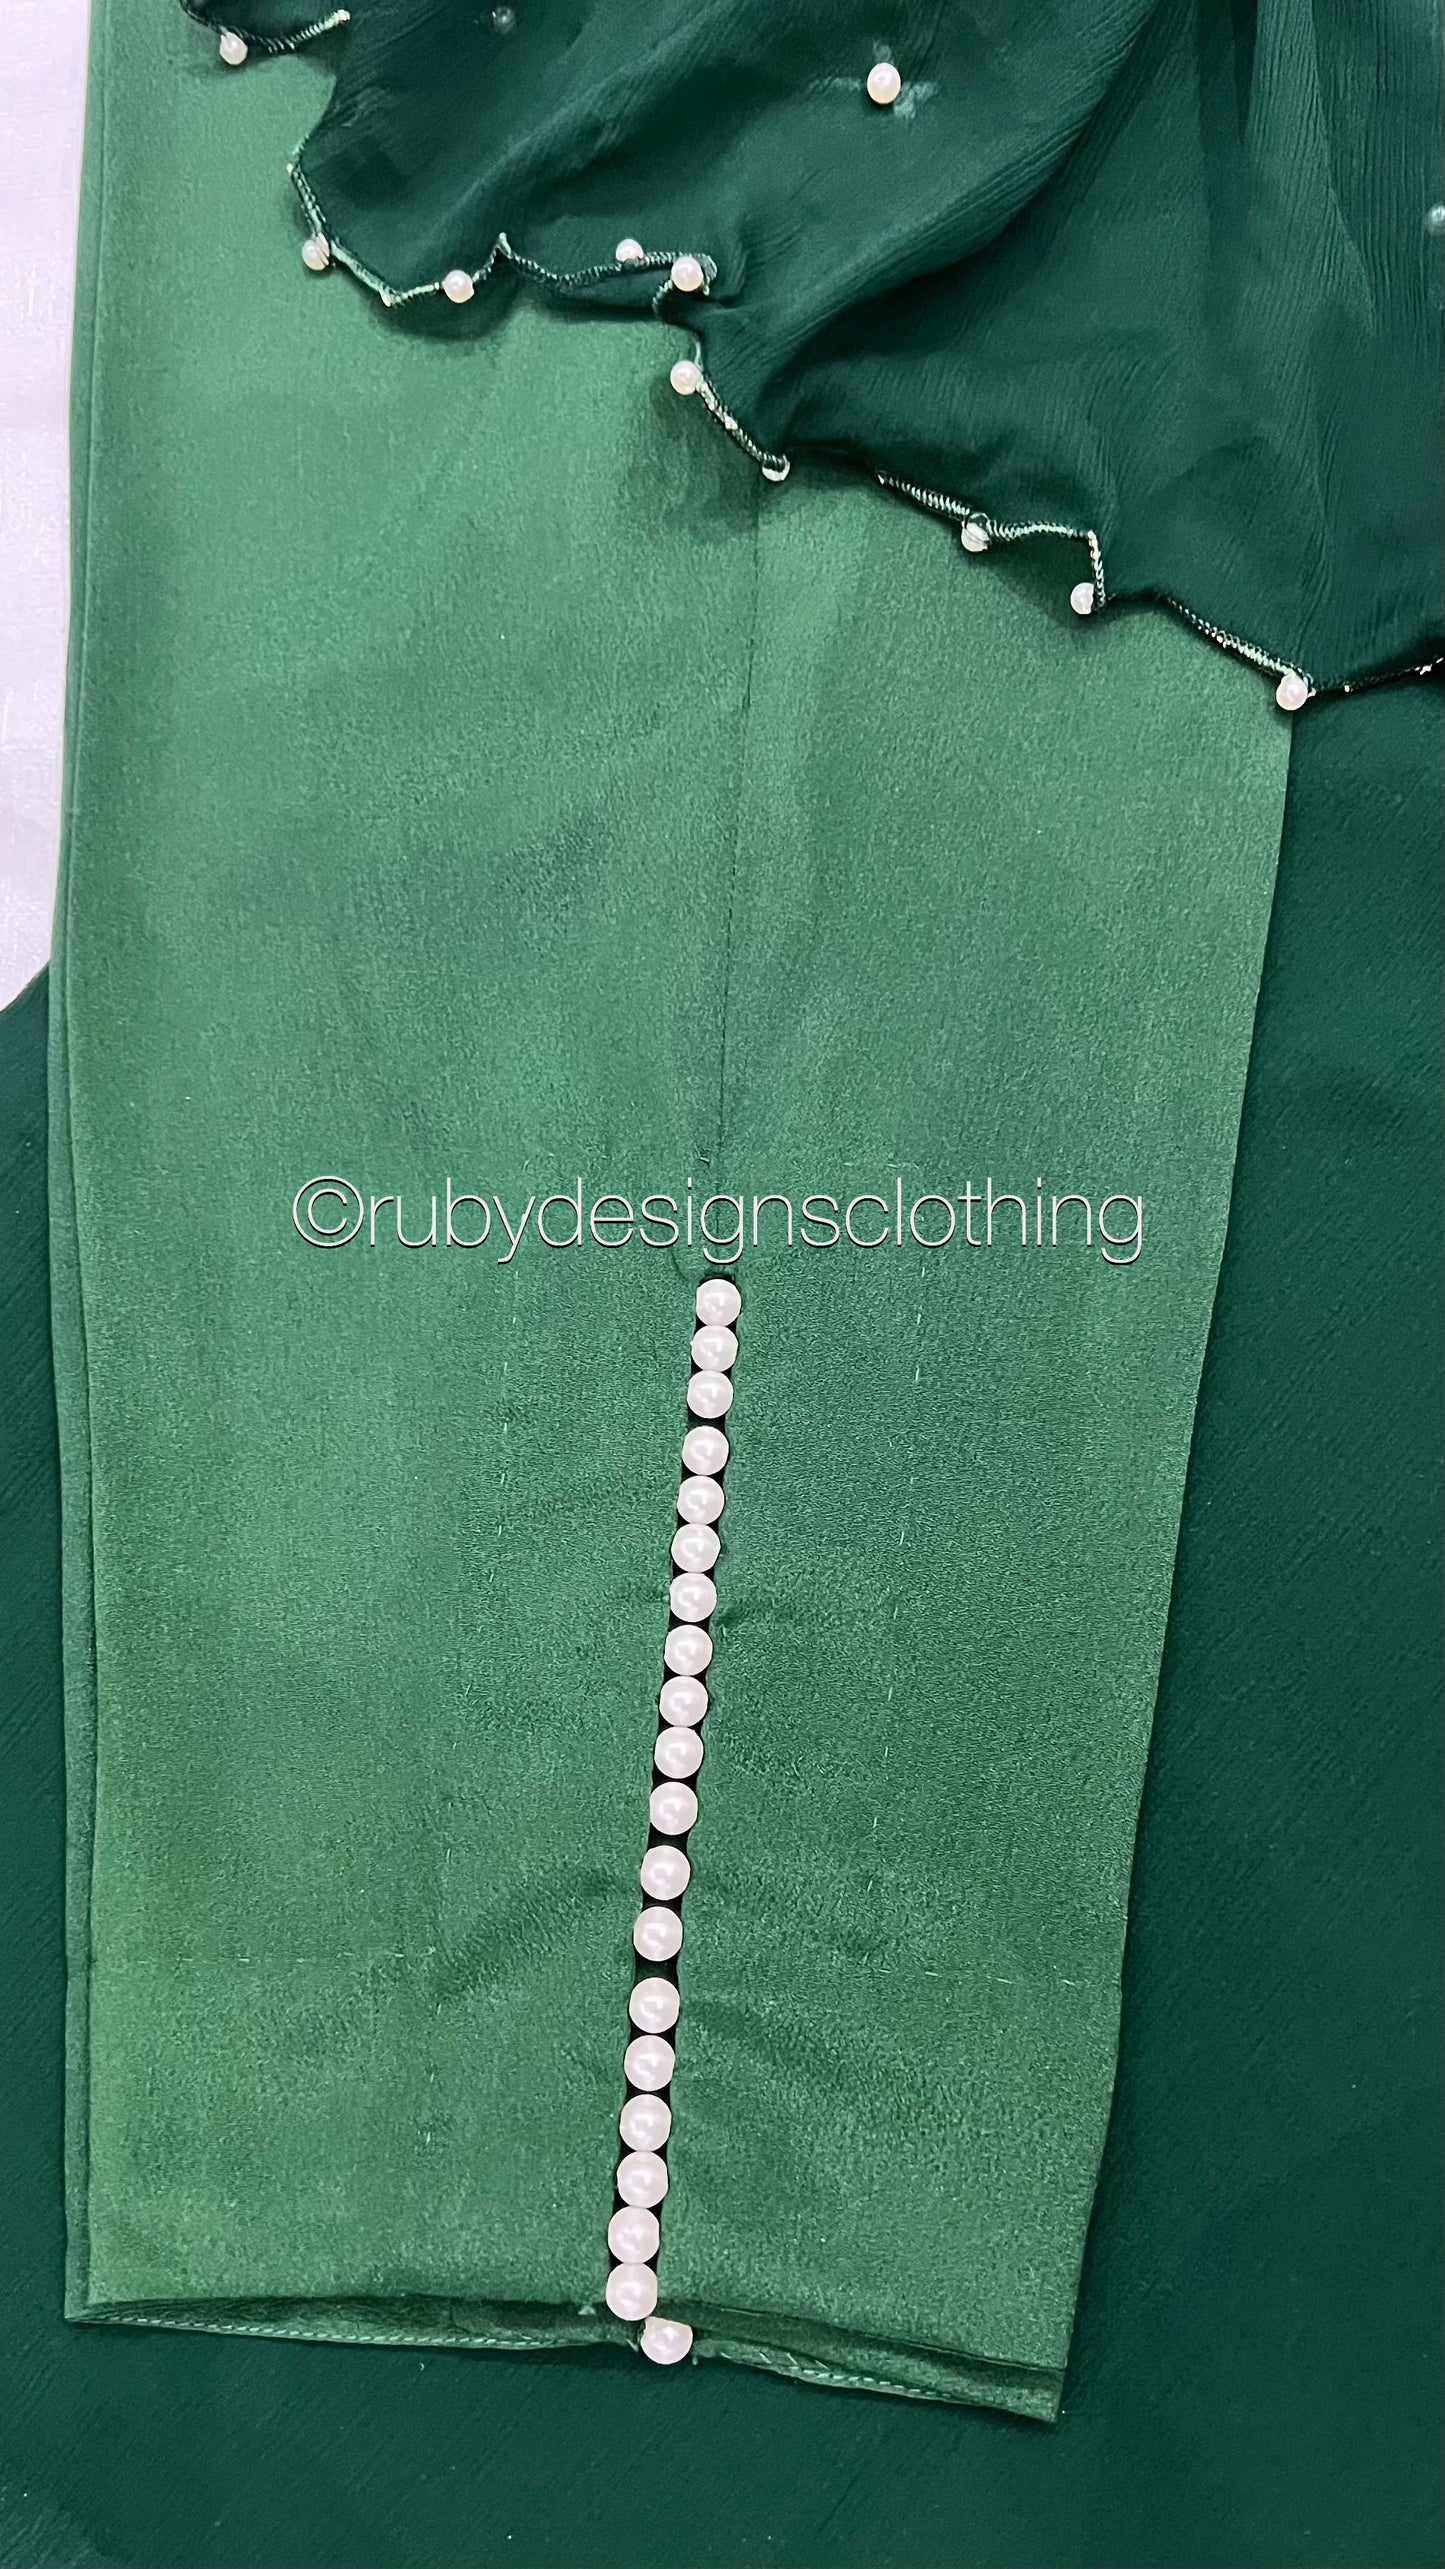 DUA Emerald - 3 Piece Emerald Chiffon Suit with Chiffon Dupatta and Pearls